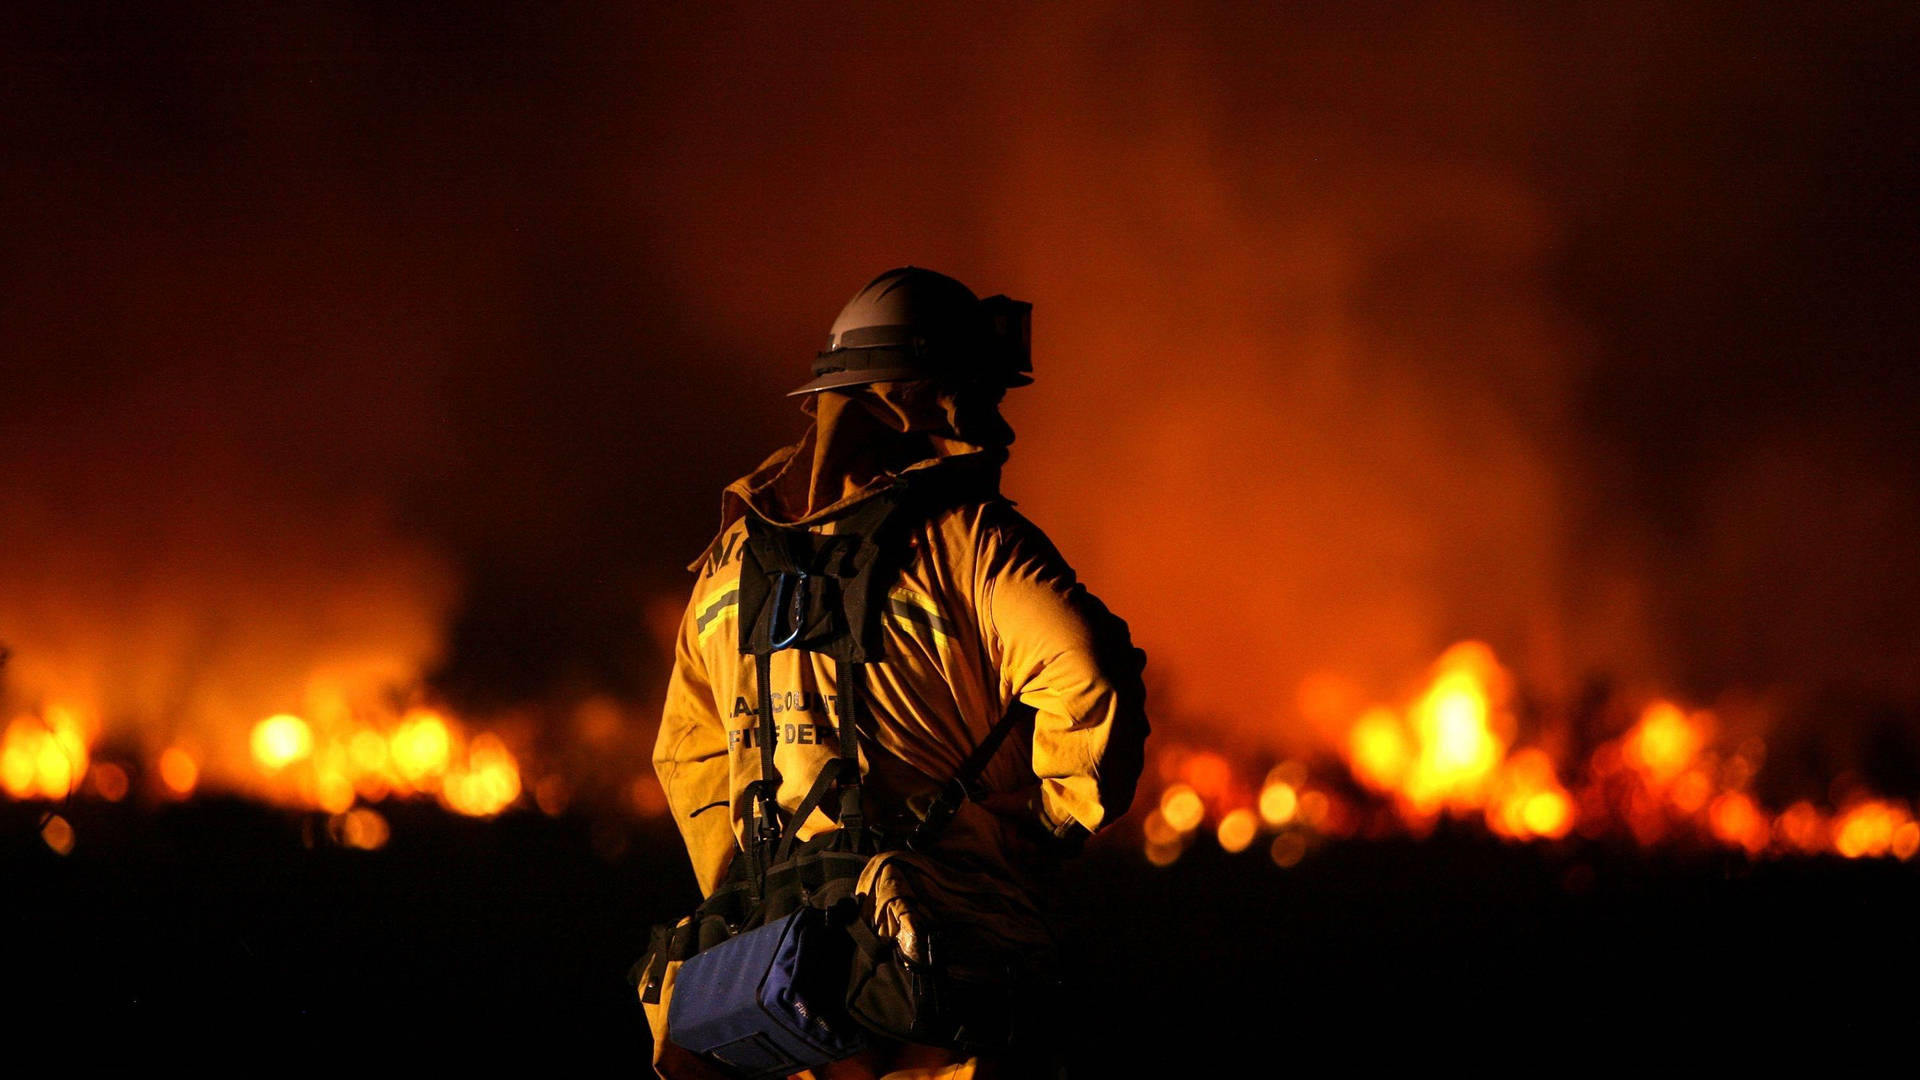 Brave Firefighter Extinguishing Flames